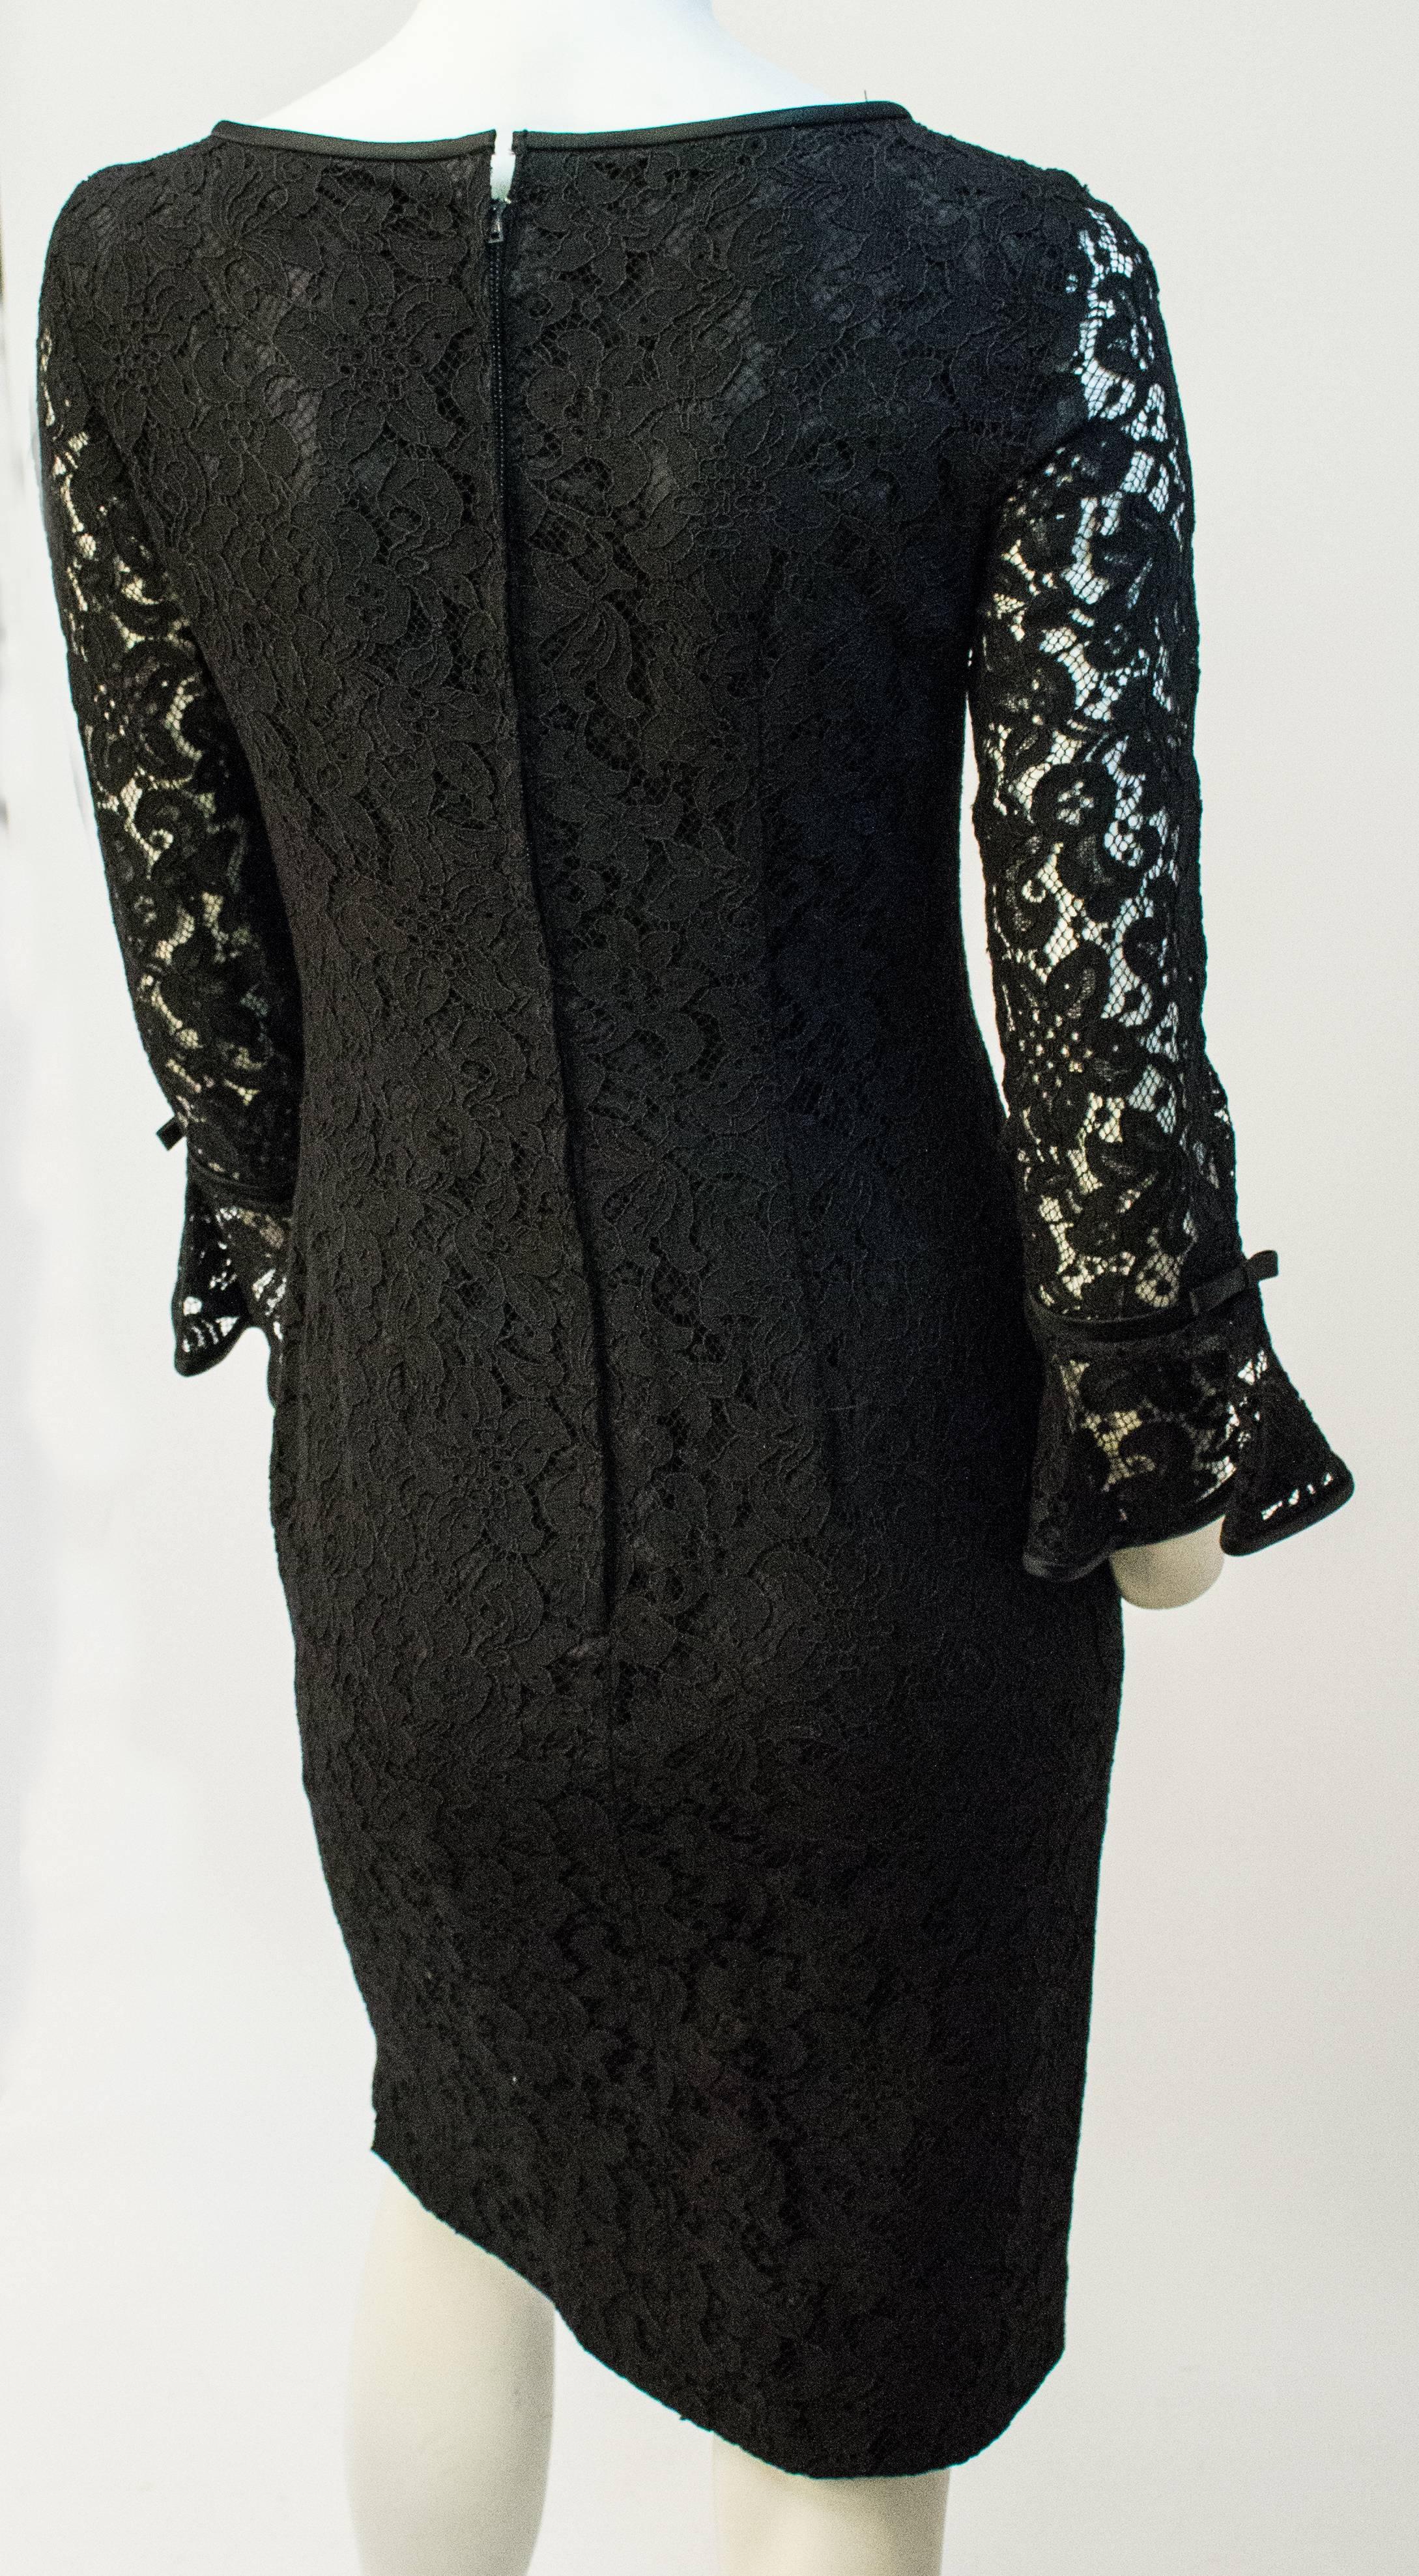 60s Black Lace Cocktail Dress. Mid-length sleeves. Metal back zipper. Satin trim.